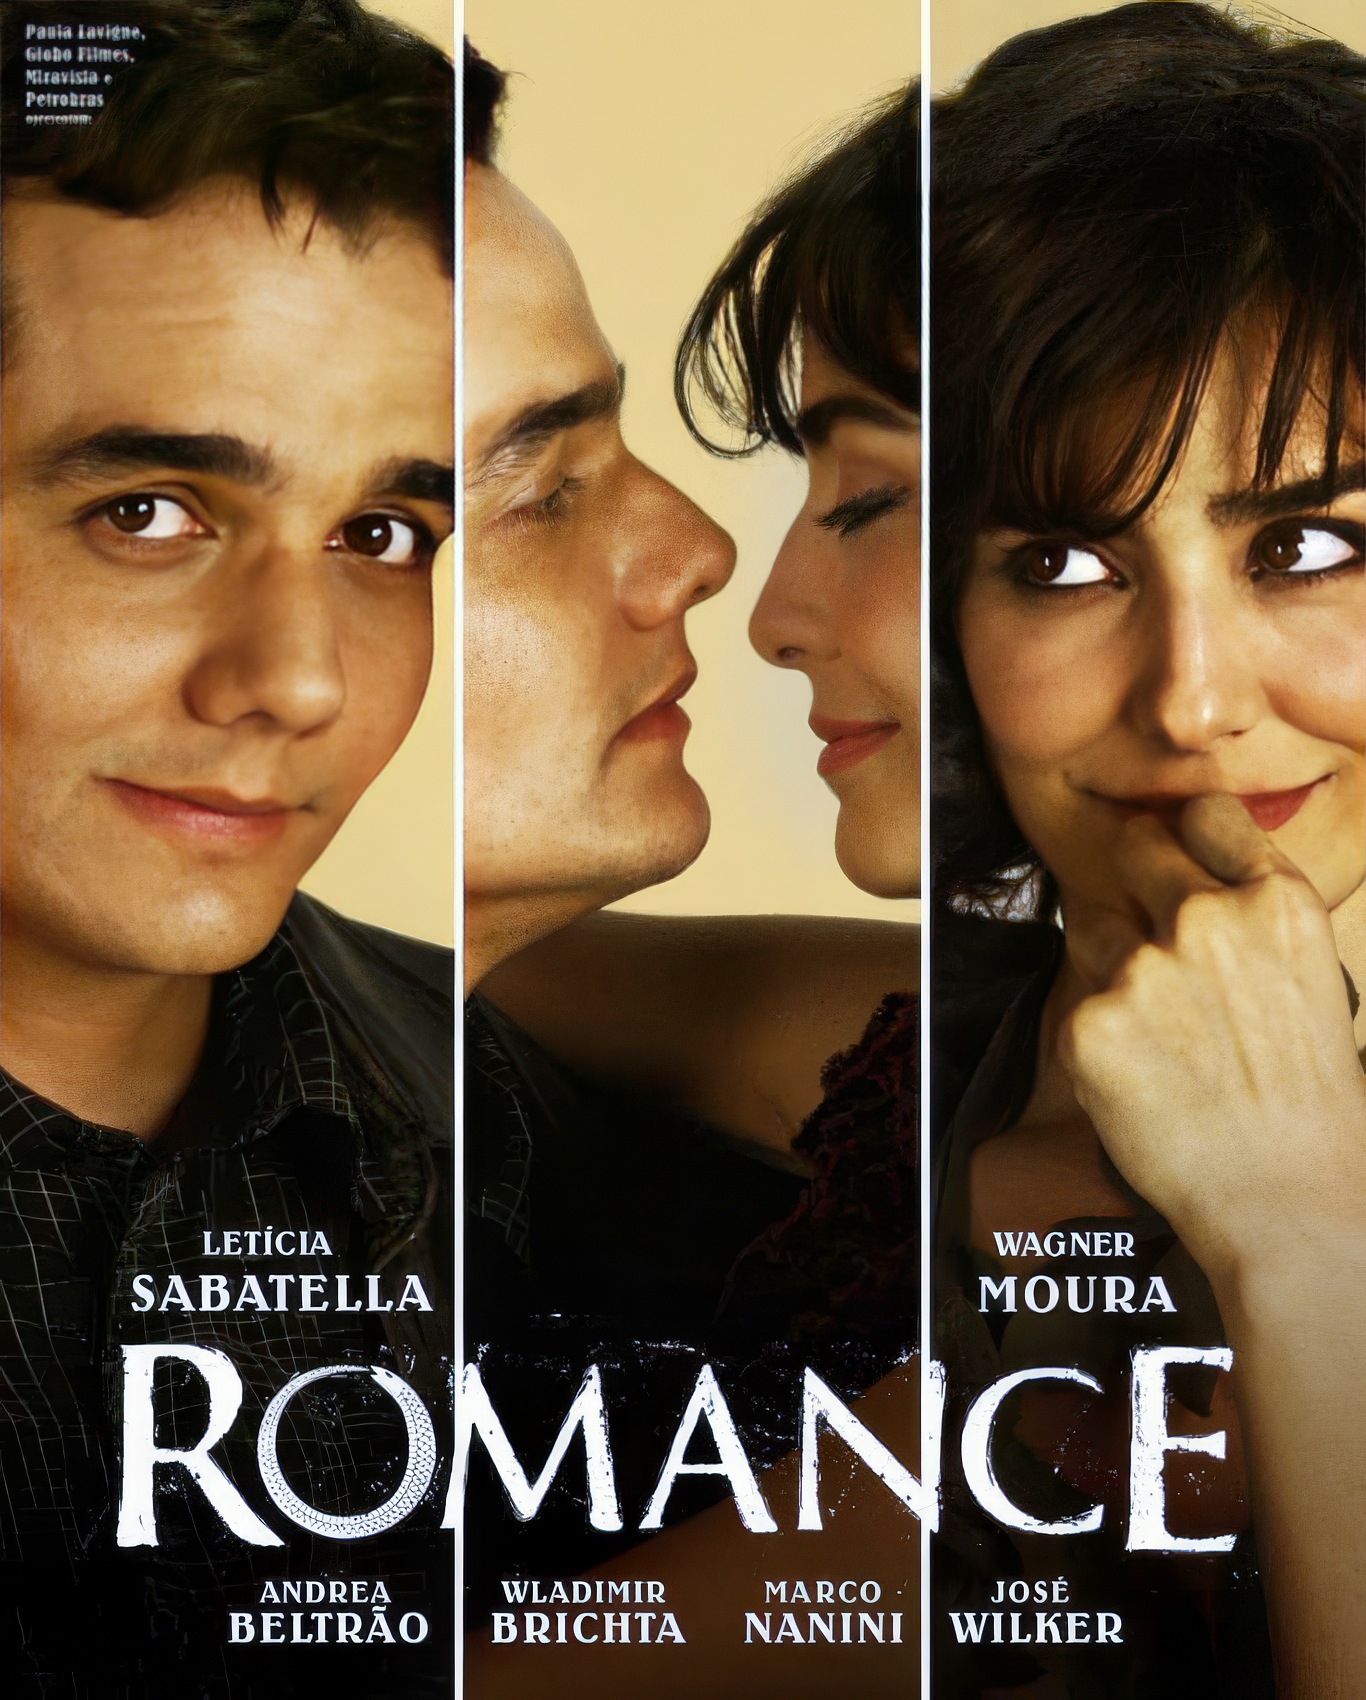 Romance (2008) - DVDrip XVID - Braziliaans - Engsub